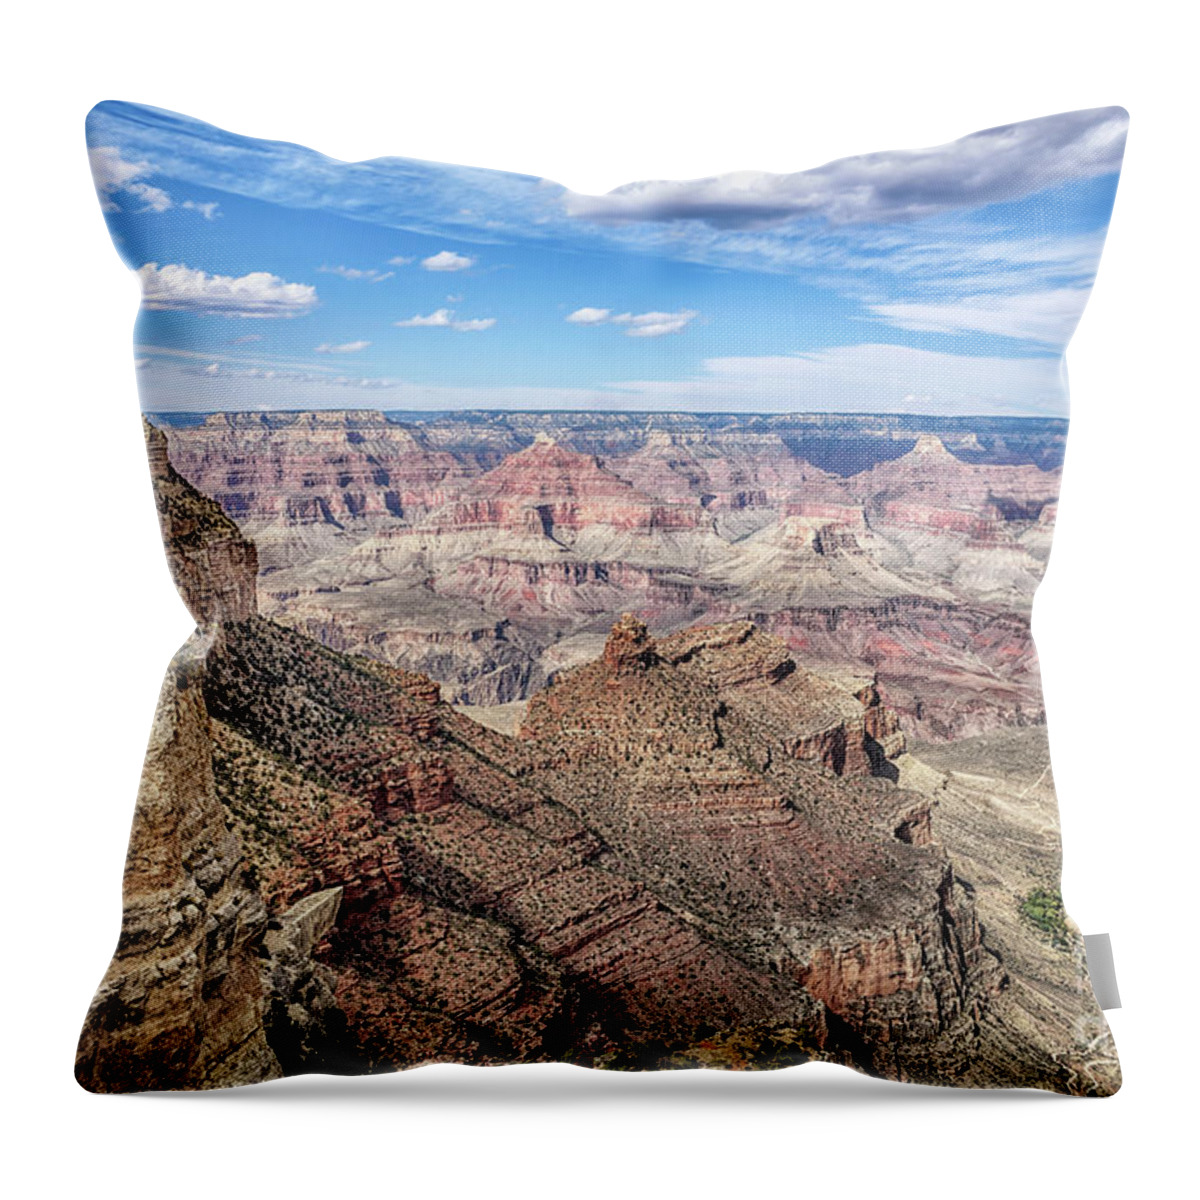 Top Artist Throw Pillow featuring the photograph Grand Canyon South Rim Vista by Norman Gabitzsch